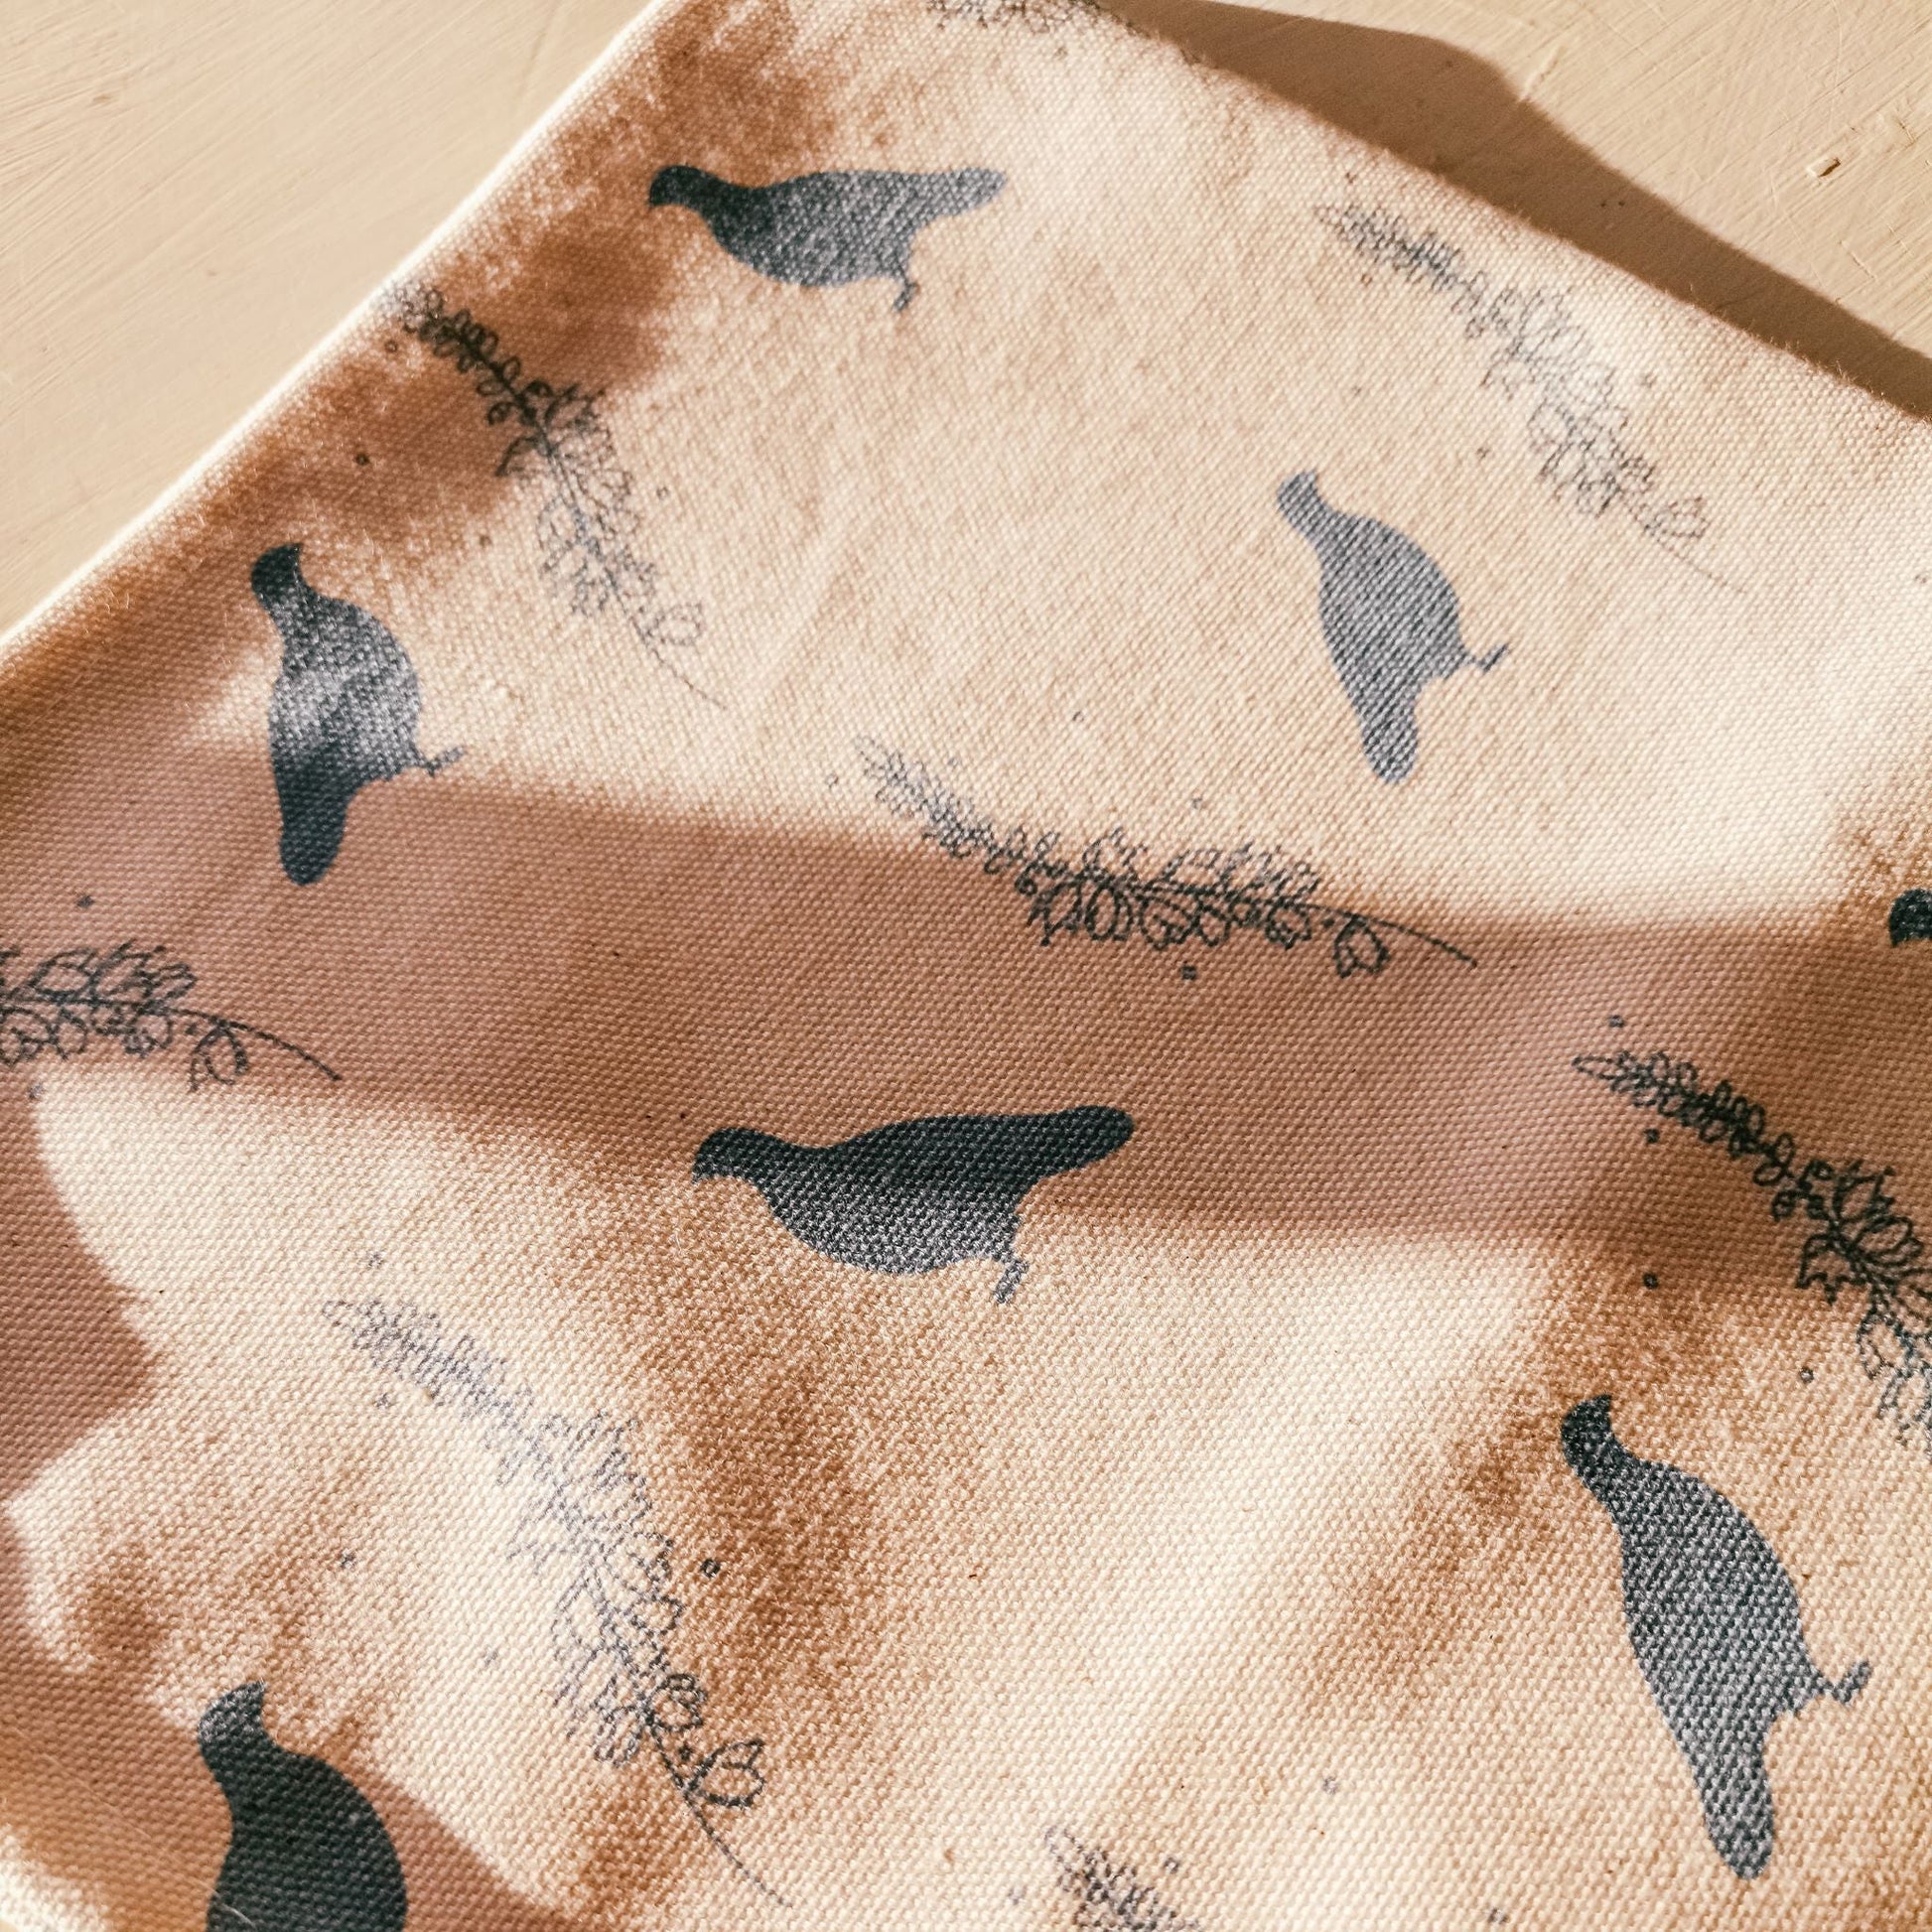 Grouse & Heather Tea Towels - F&B Crafts - F&B Designs